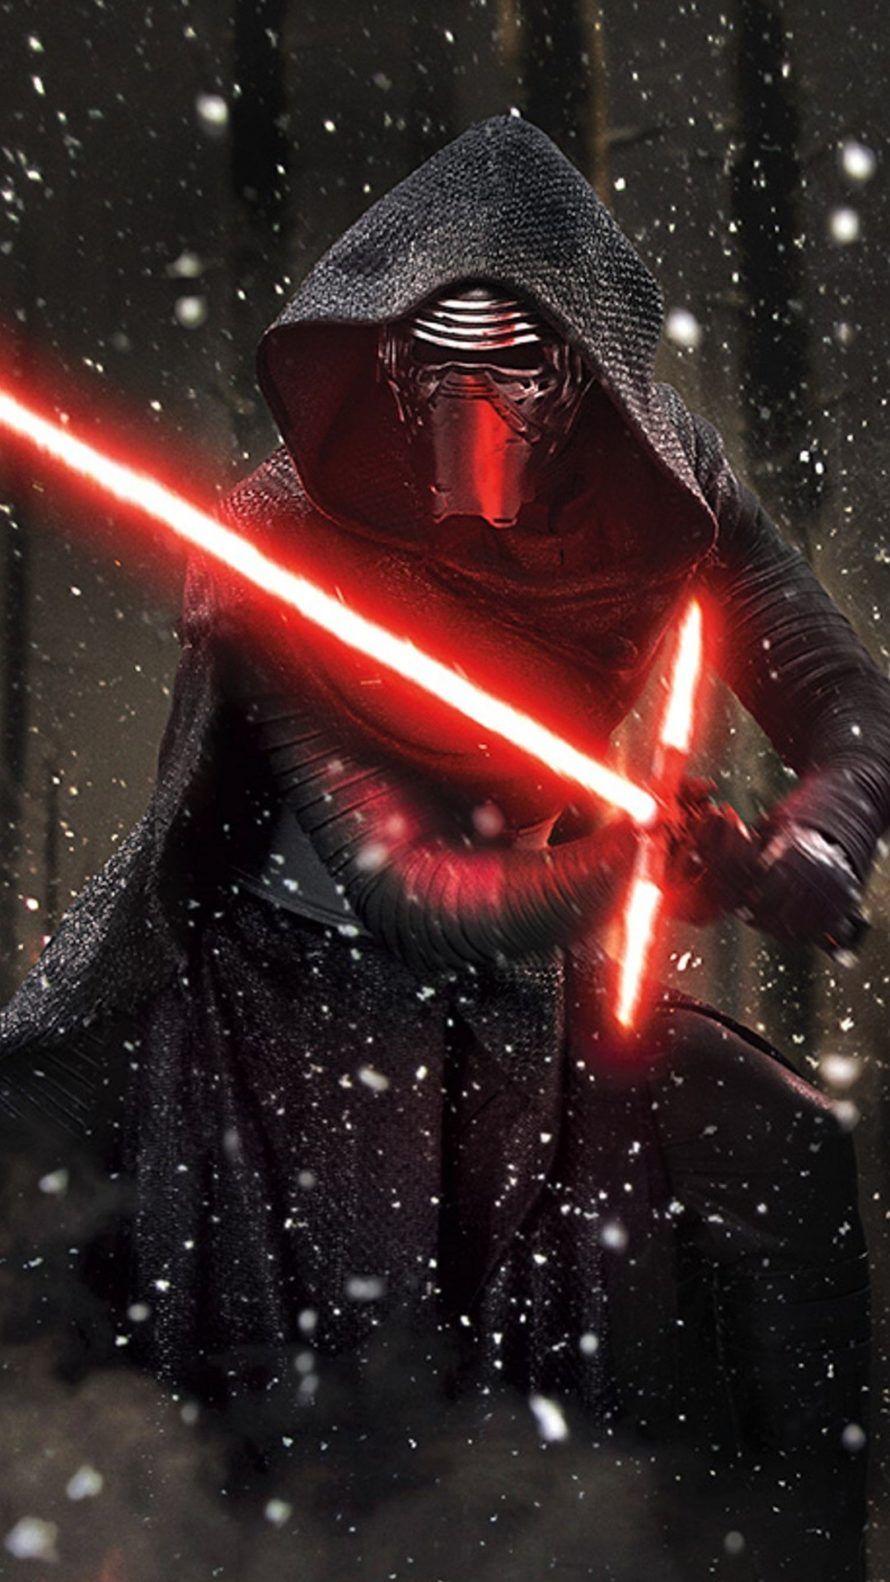 Kylo Ren Darth Vader Wallpapers - Top Free Kylo Ren Darth Vader ...